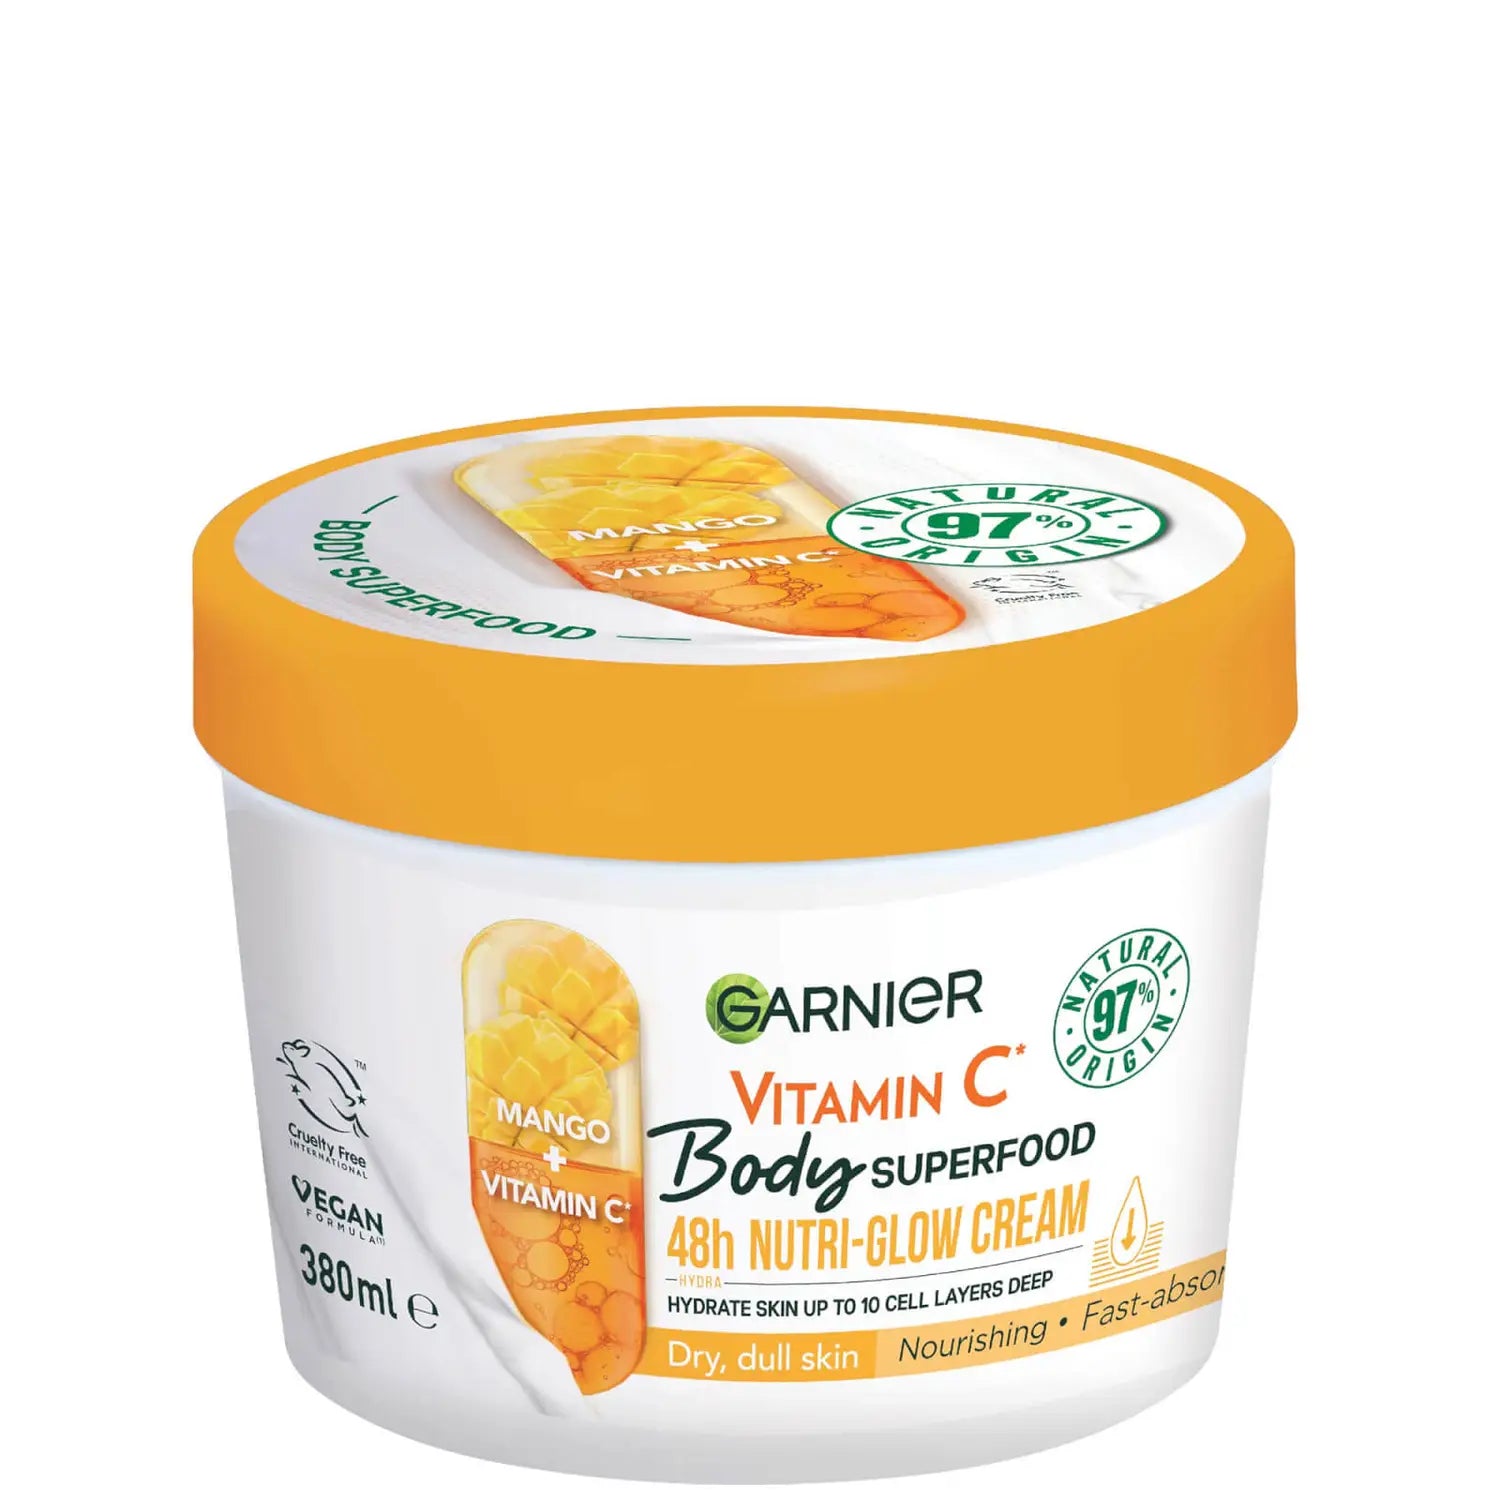 Body Superfood 48hr Nutri-Glow Cream Mango & Vitamin C